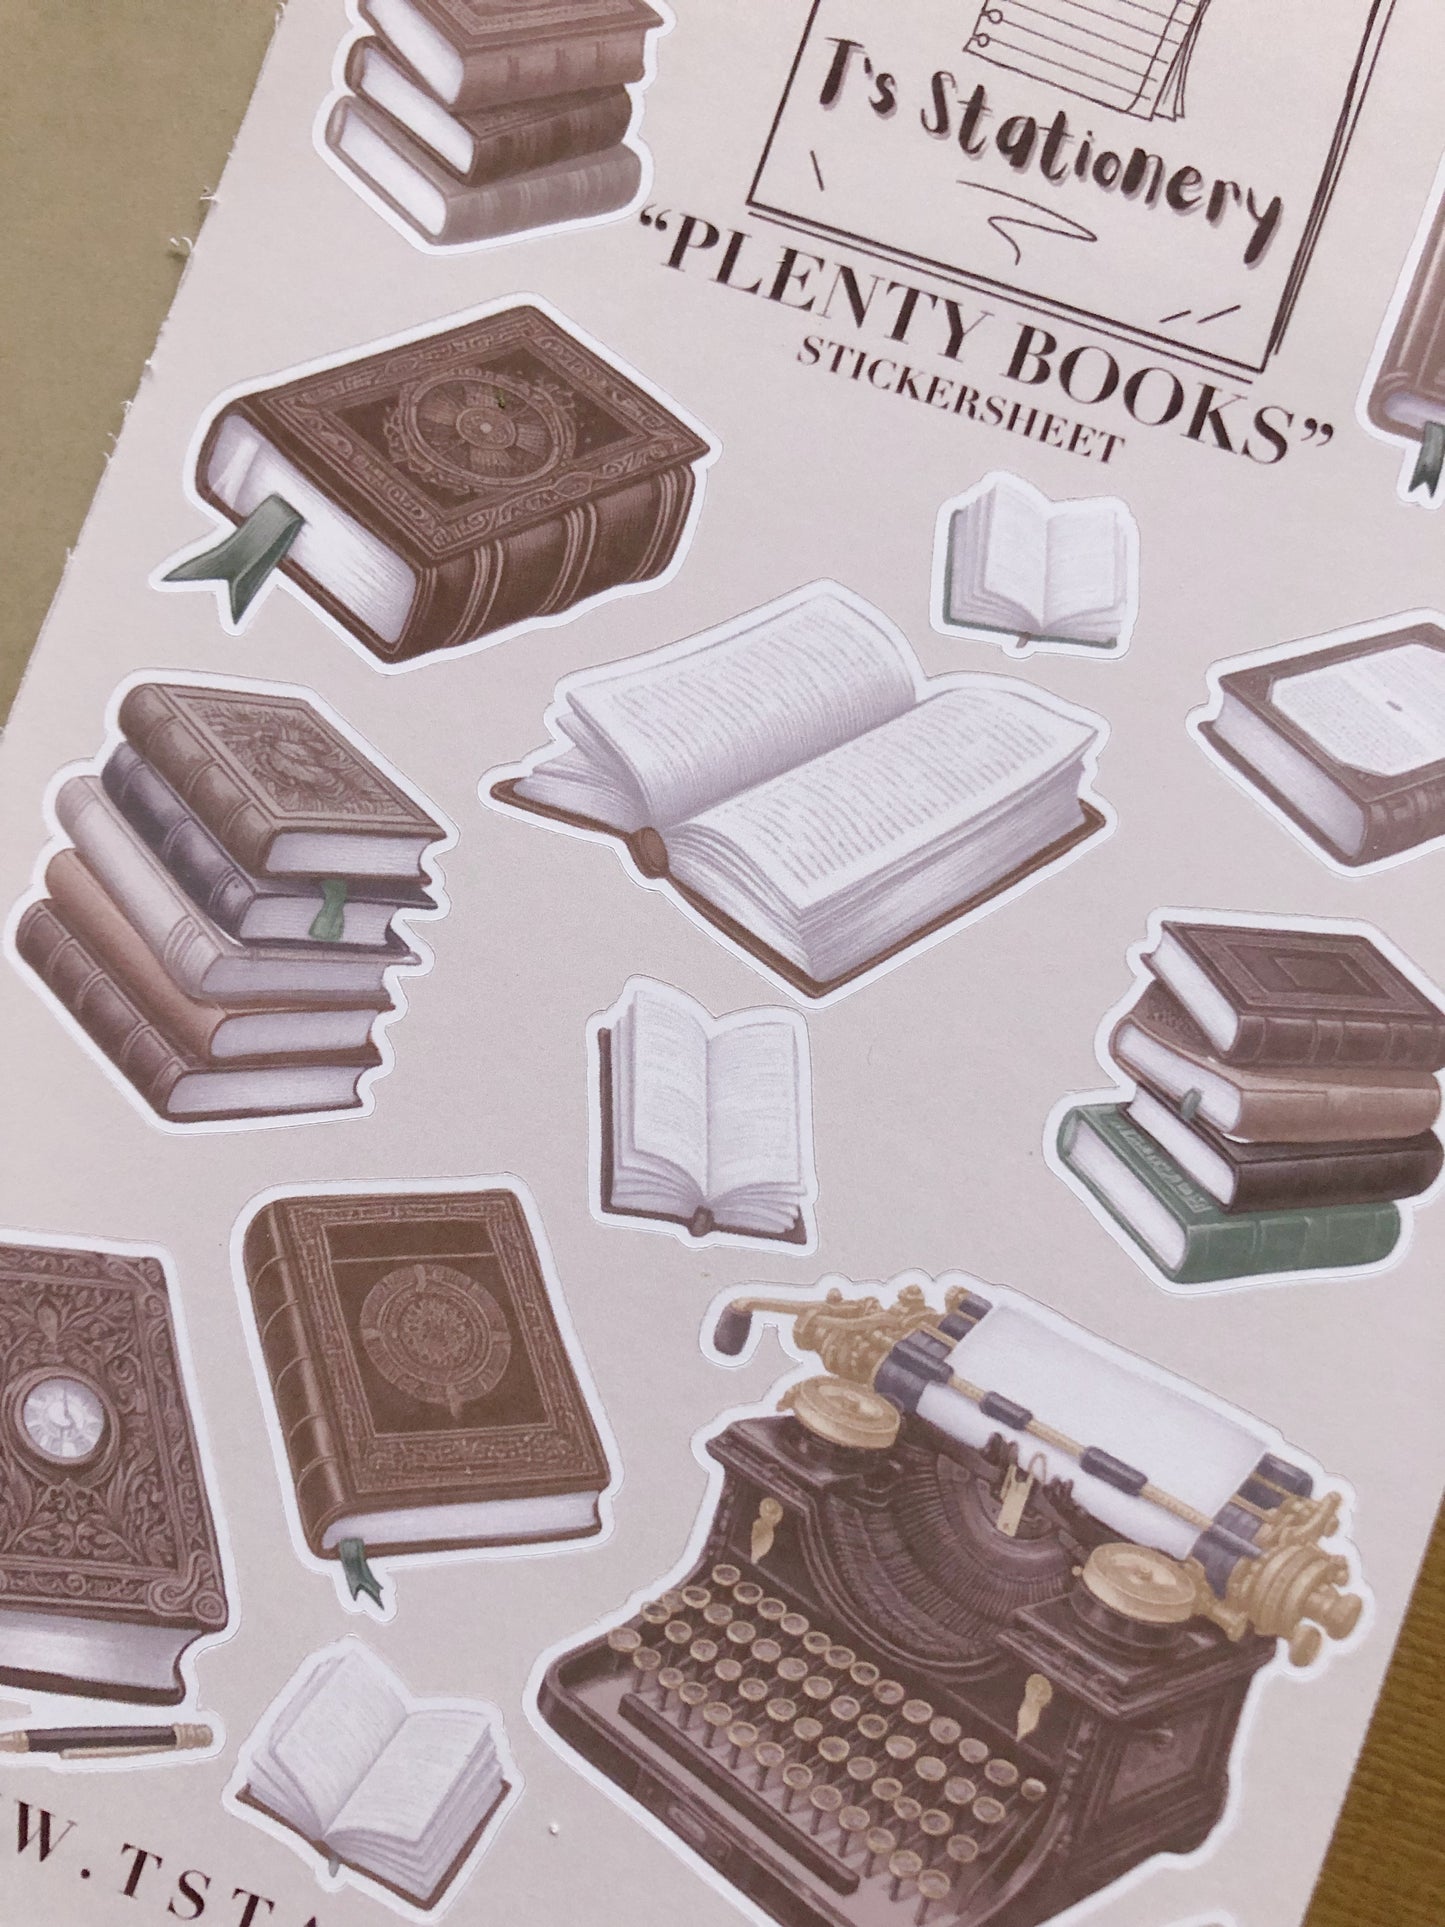 "Plenty Books" Sticker Sheet